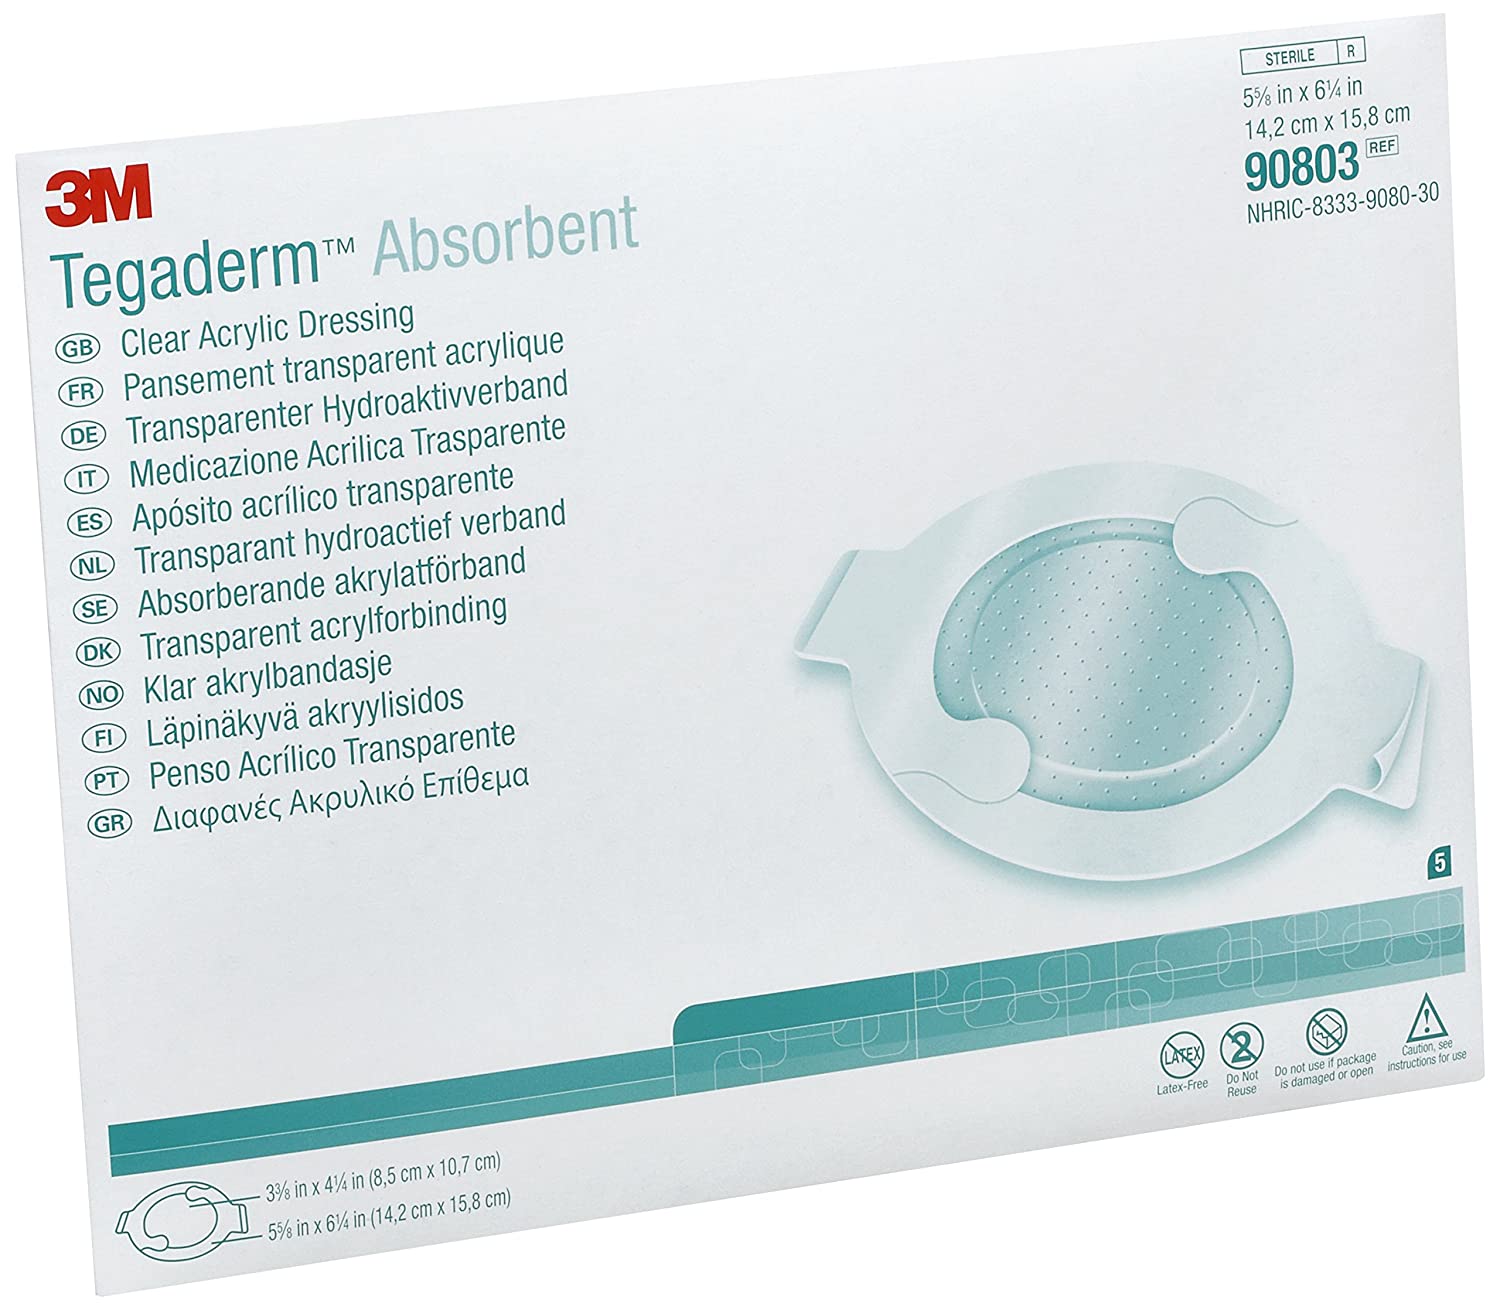 3M Tegaderm Absorbent Clear Acrylic Dressing 14.2 x 15.8cm | Medical Supermarket